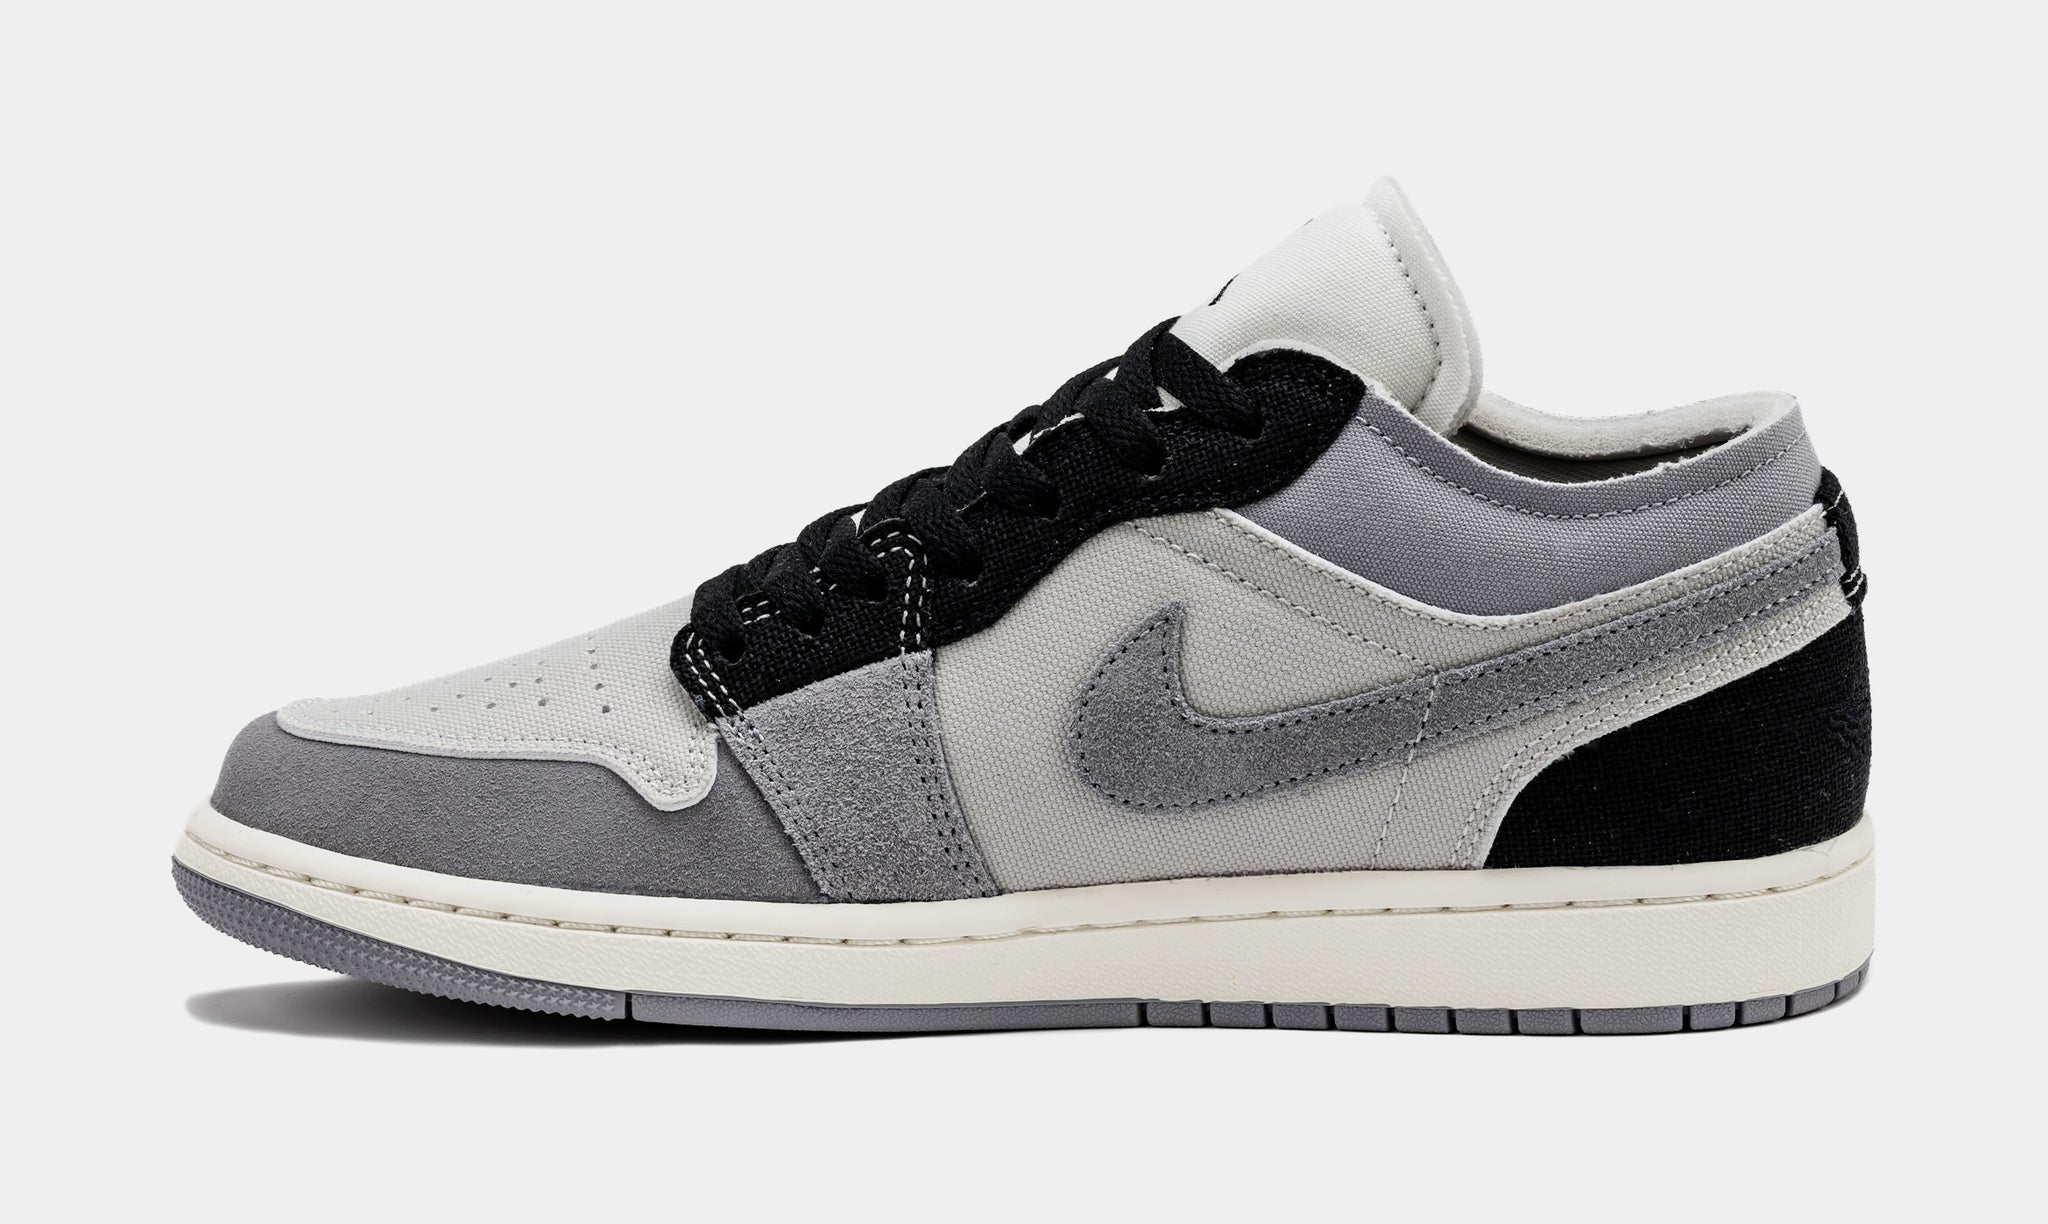 Air Jordan 1 Retro Low Craft Cement Grey Mens Basketball Shoes (Grey/Black)